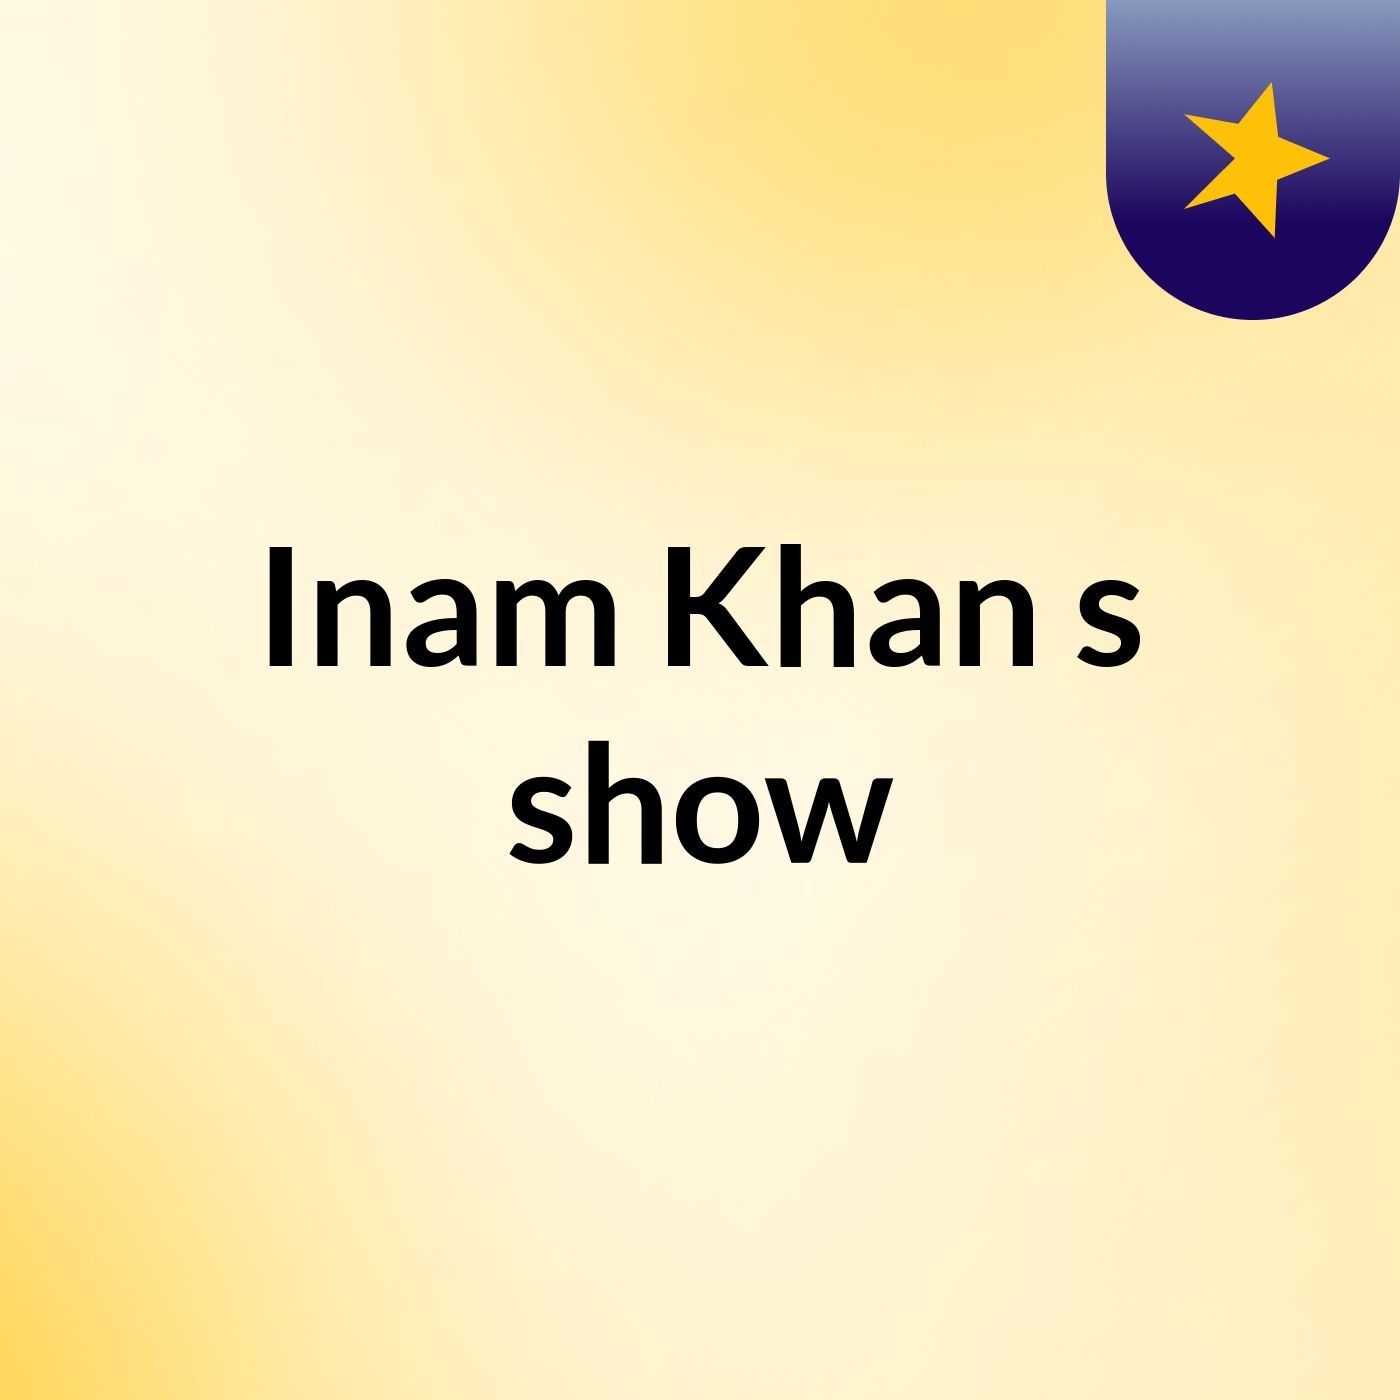 Inam Khan's show